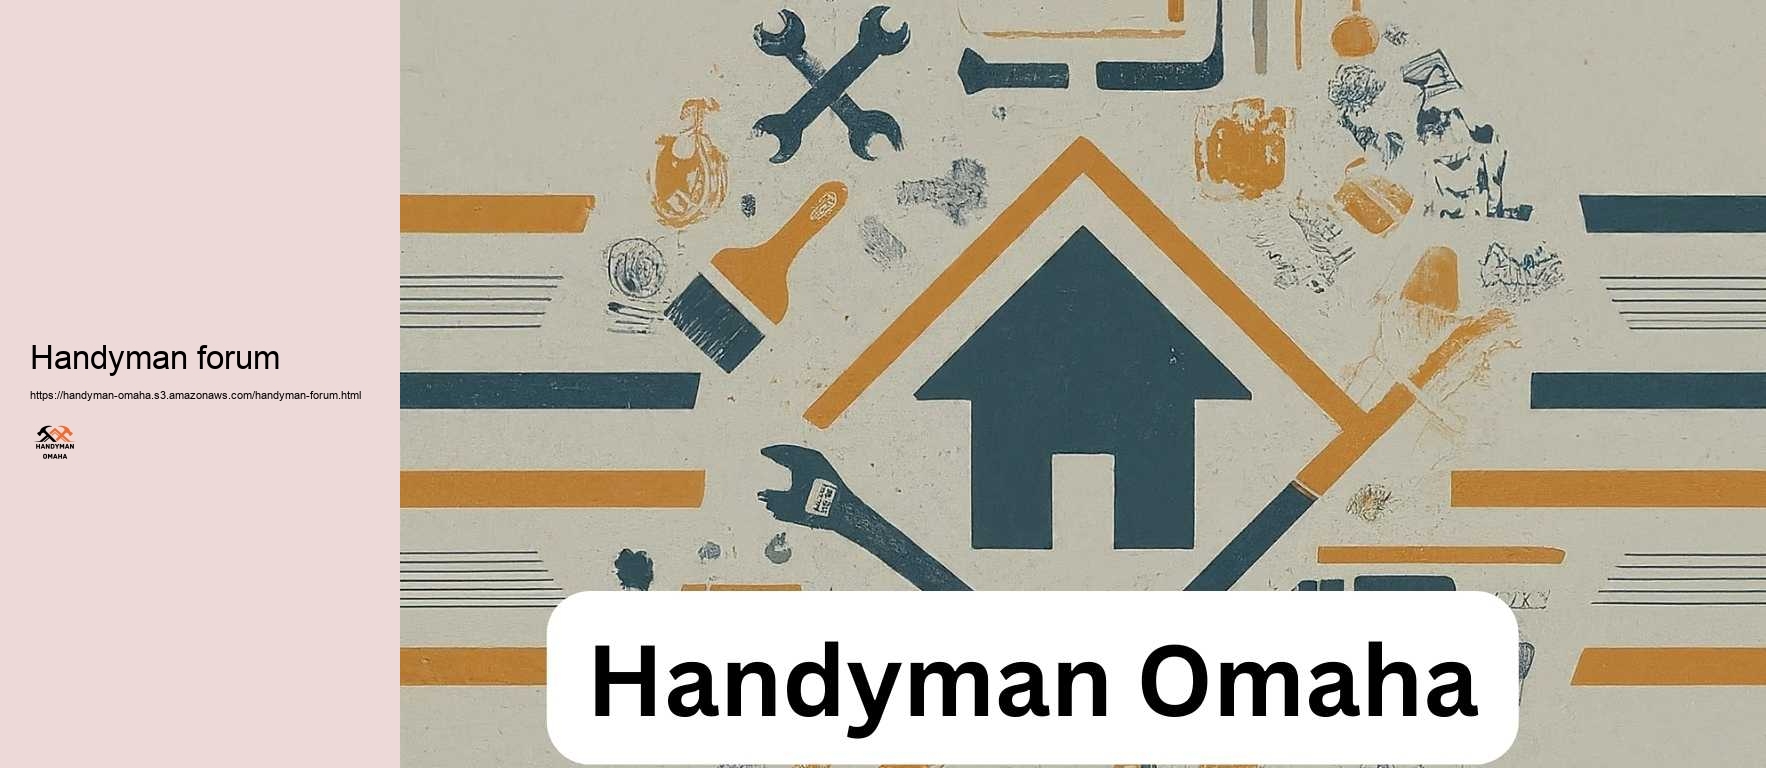 Handyman forum